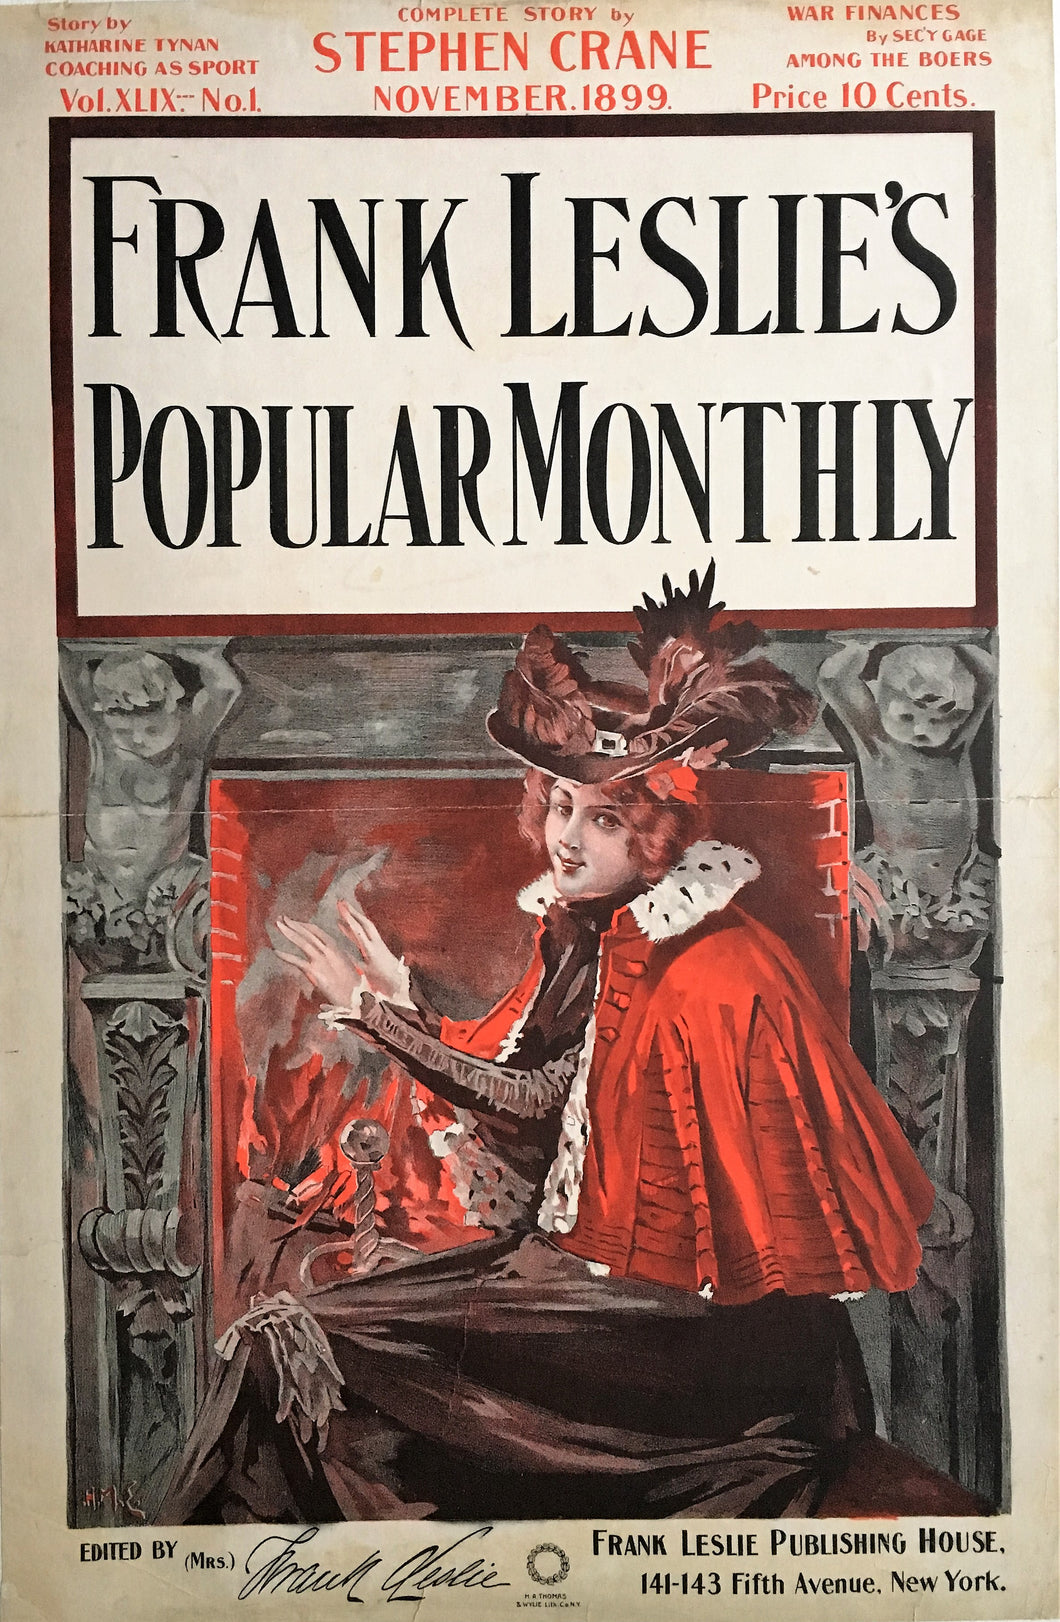 Original American Literary Poster “Frank Leslie’s Popular Monthly” for November 1899